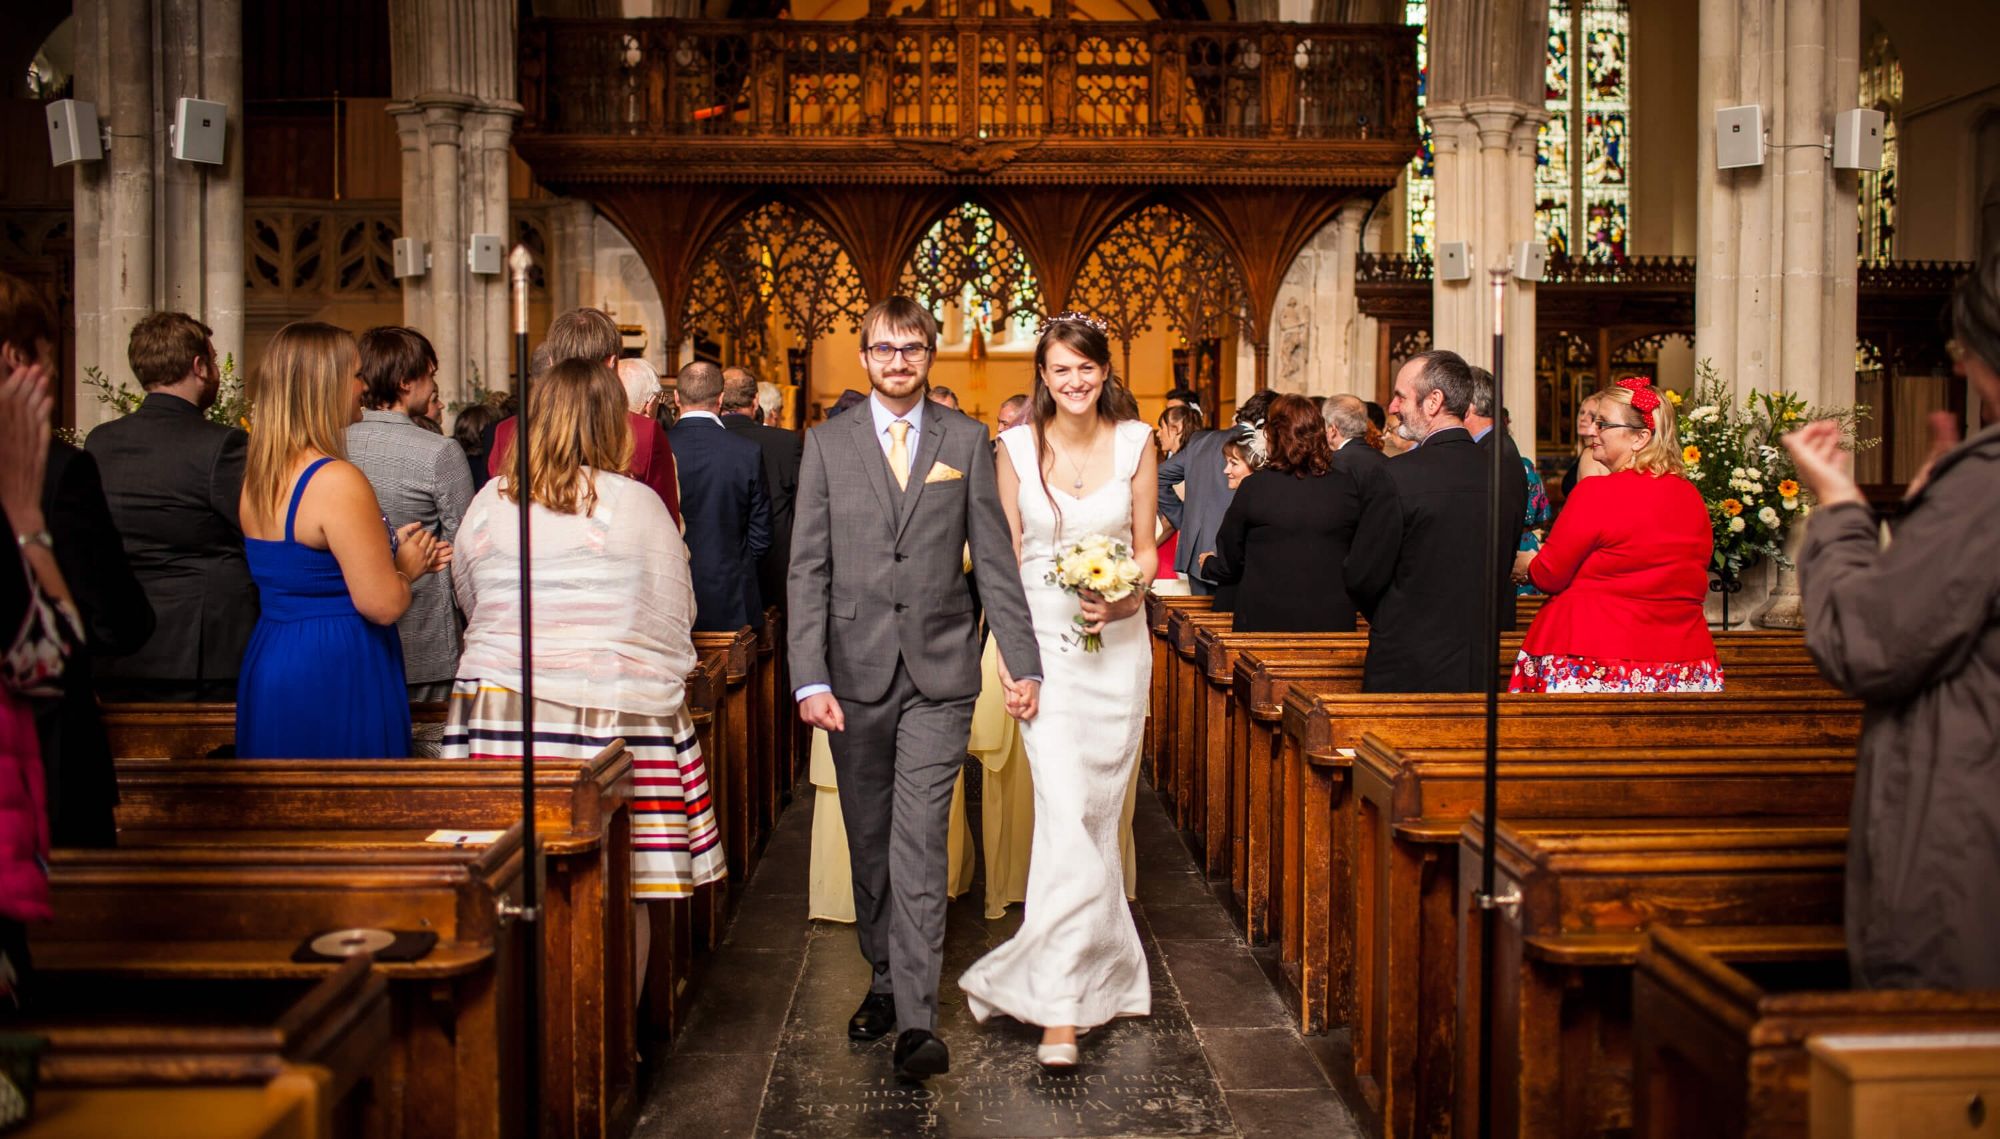 Mark Bastick - Wedding Photographer in Wiltshire - Love That Wedding!